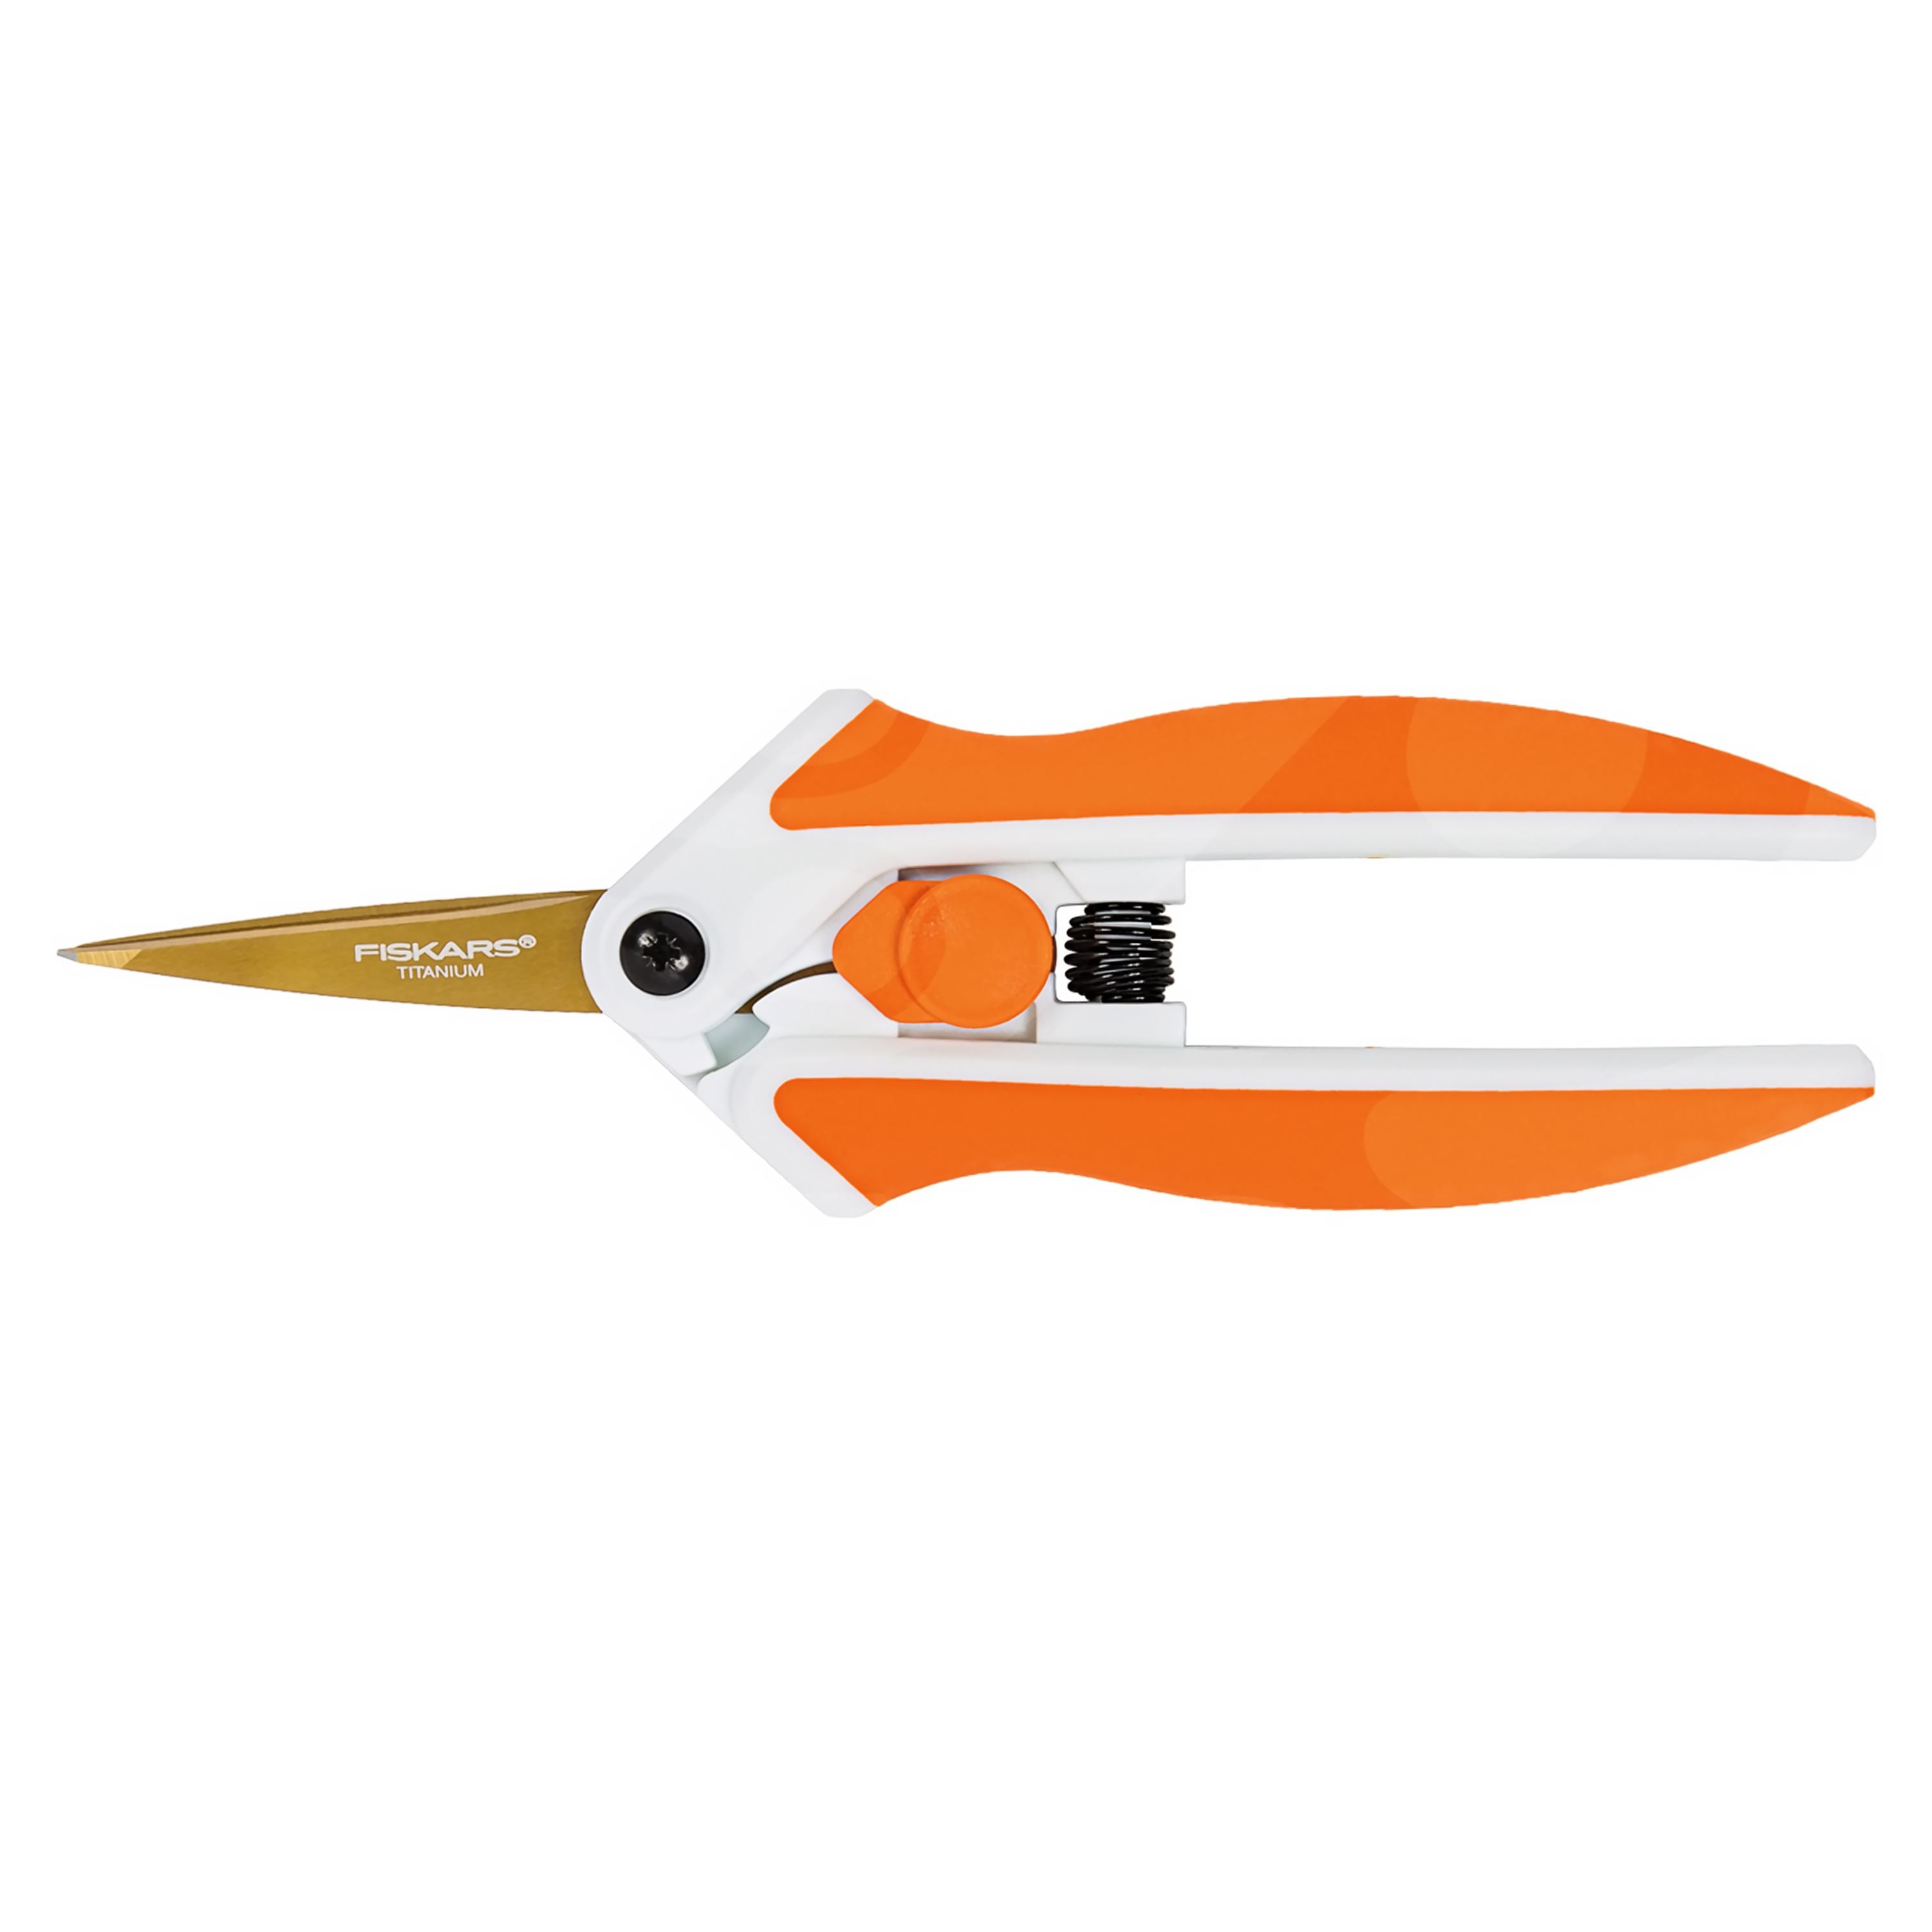 EK Success: Small Precision Scissors 5″ – Nonstick Blade